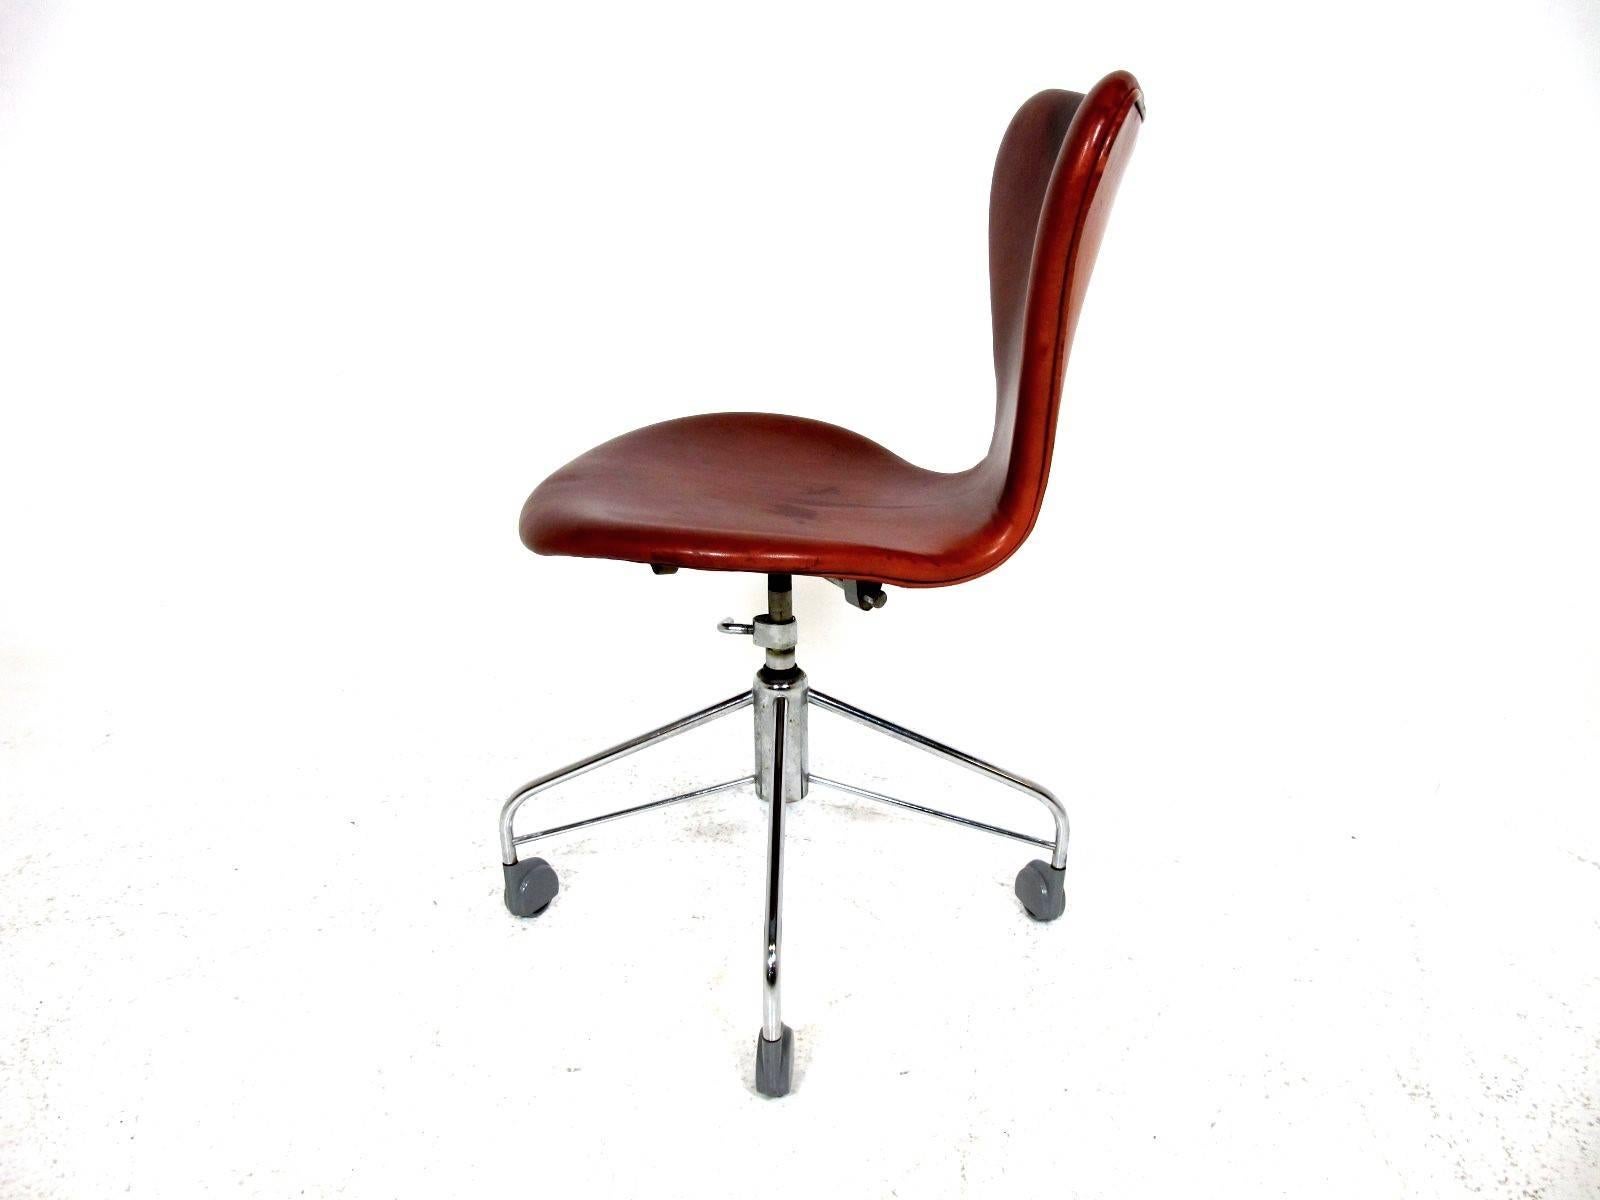 Swivel chair/office chair in cognac leather, model 3117 designed by Arne Jacobsen. Produced by Fritz Hansen in Denmark, 1960s.